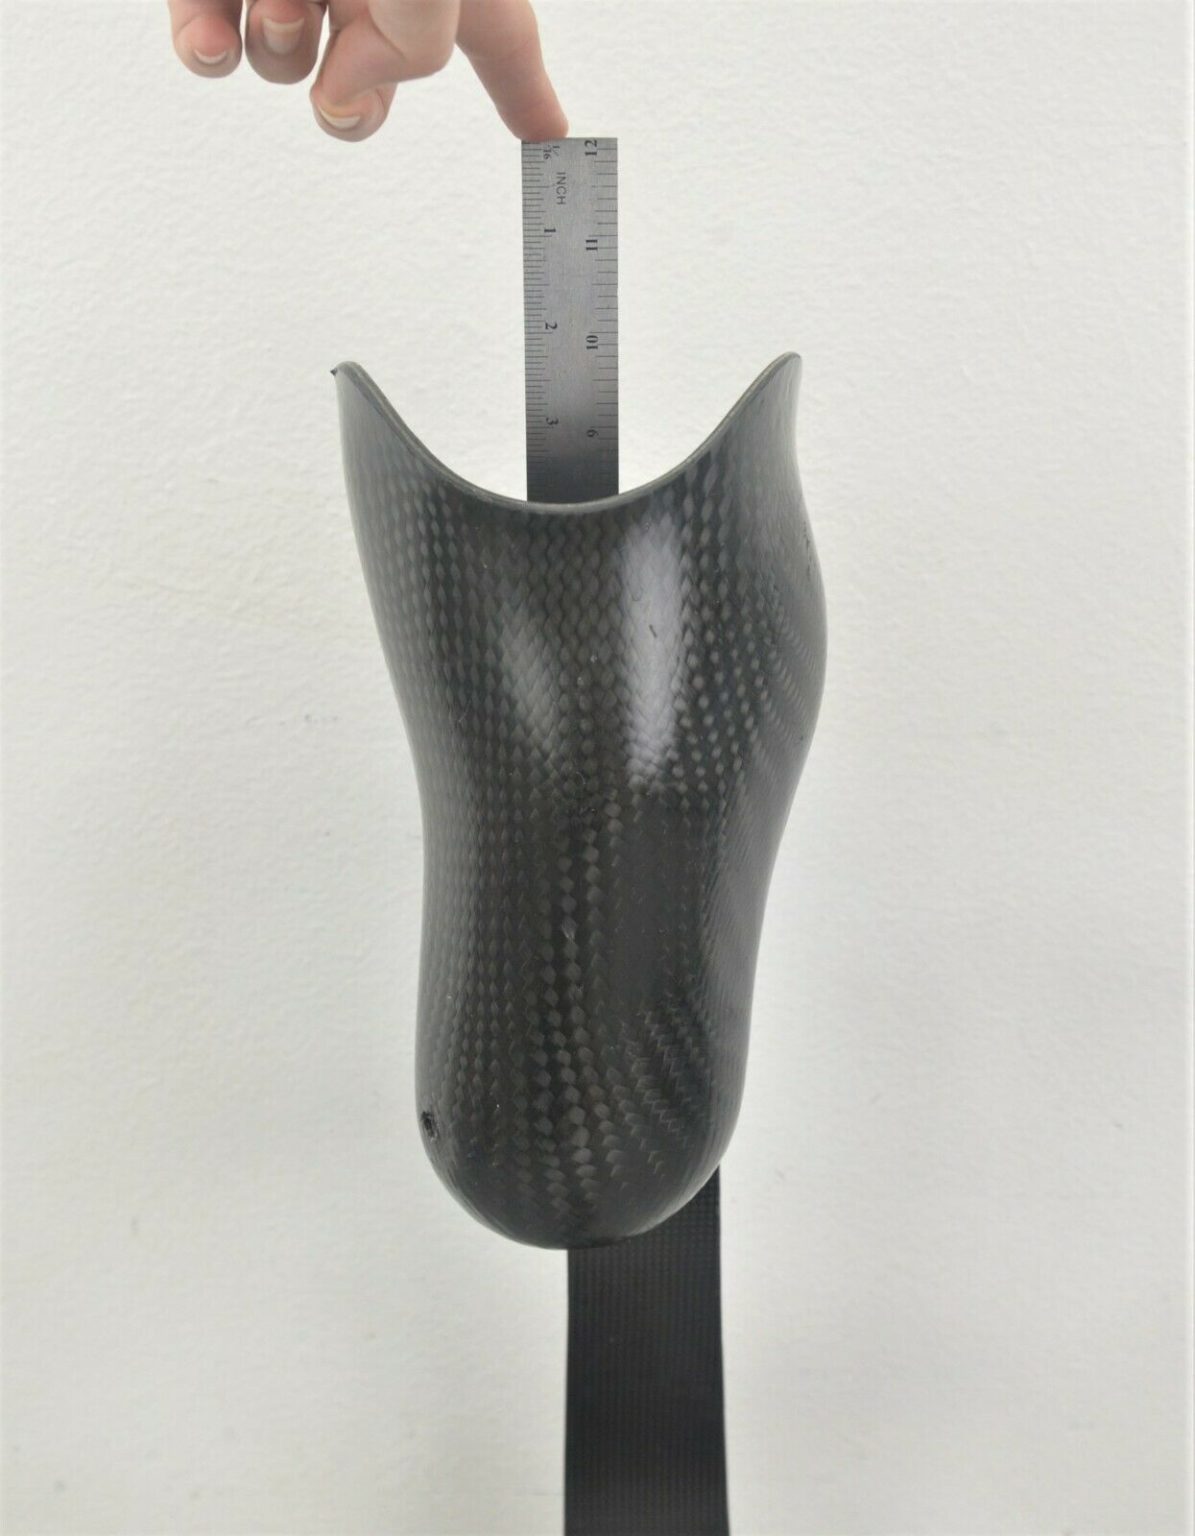 Prosthetic Innovations Cat 4 Carbon Fiber Prosthetic Right Leg Below